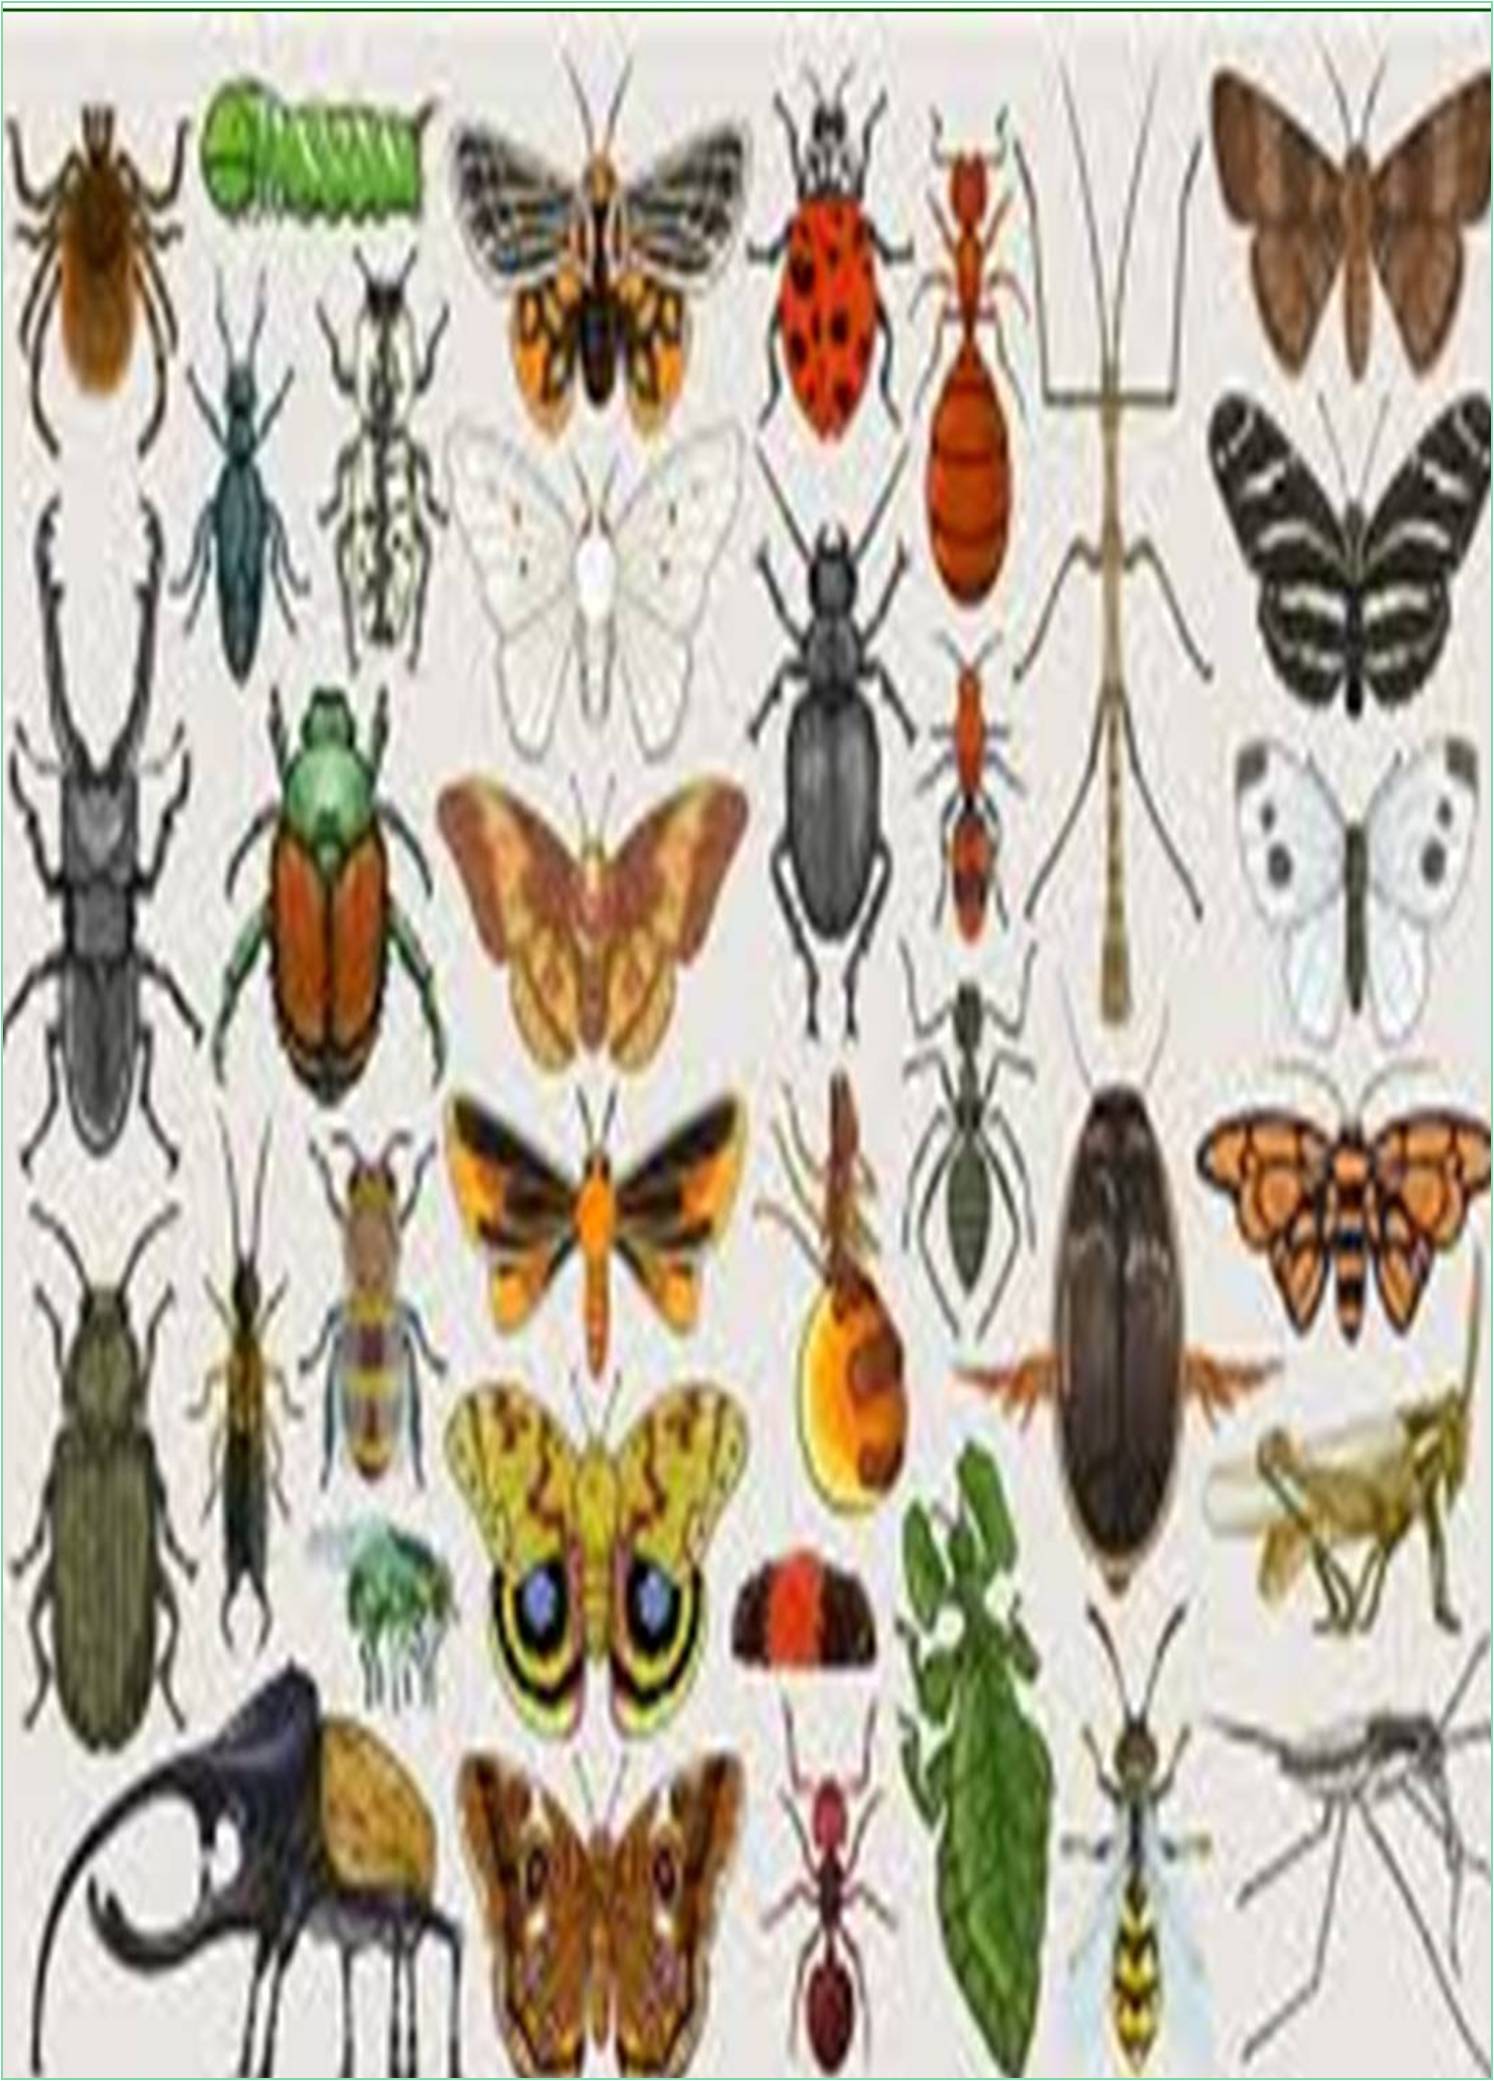 international-journal-of-entomology-research-banner.jpg